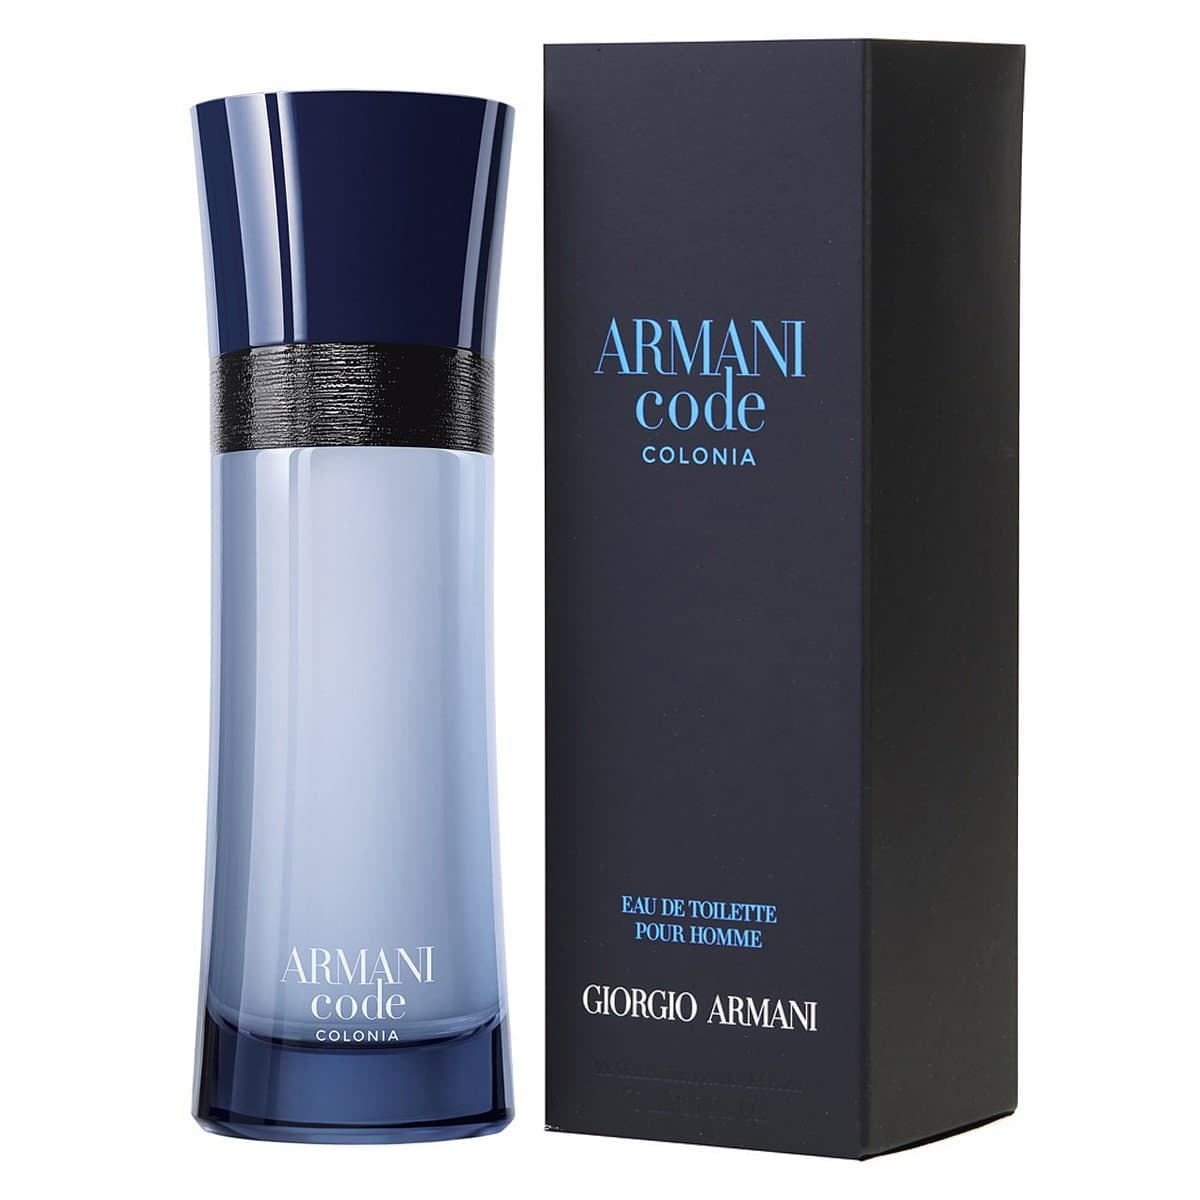 Code pour homme. Giorgio Armani Armani code. Giorgio Armani Armani code Parfum мужские. Армани код Джорджио мужские духи 100 мл. Armani code мужской 50 мл.